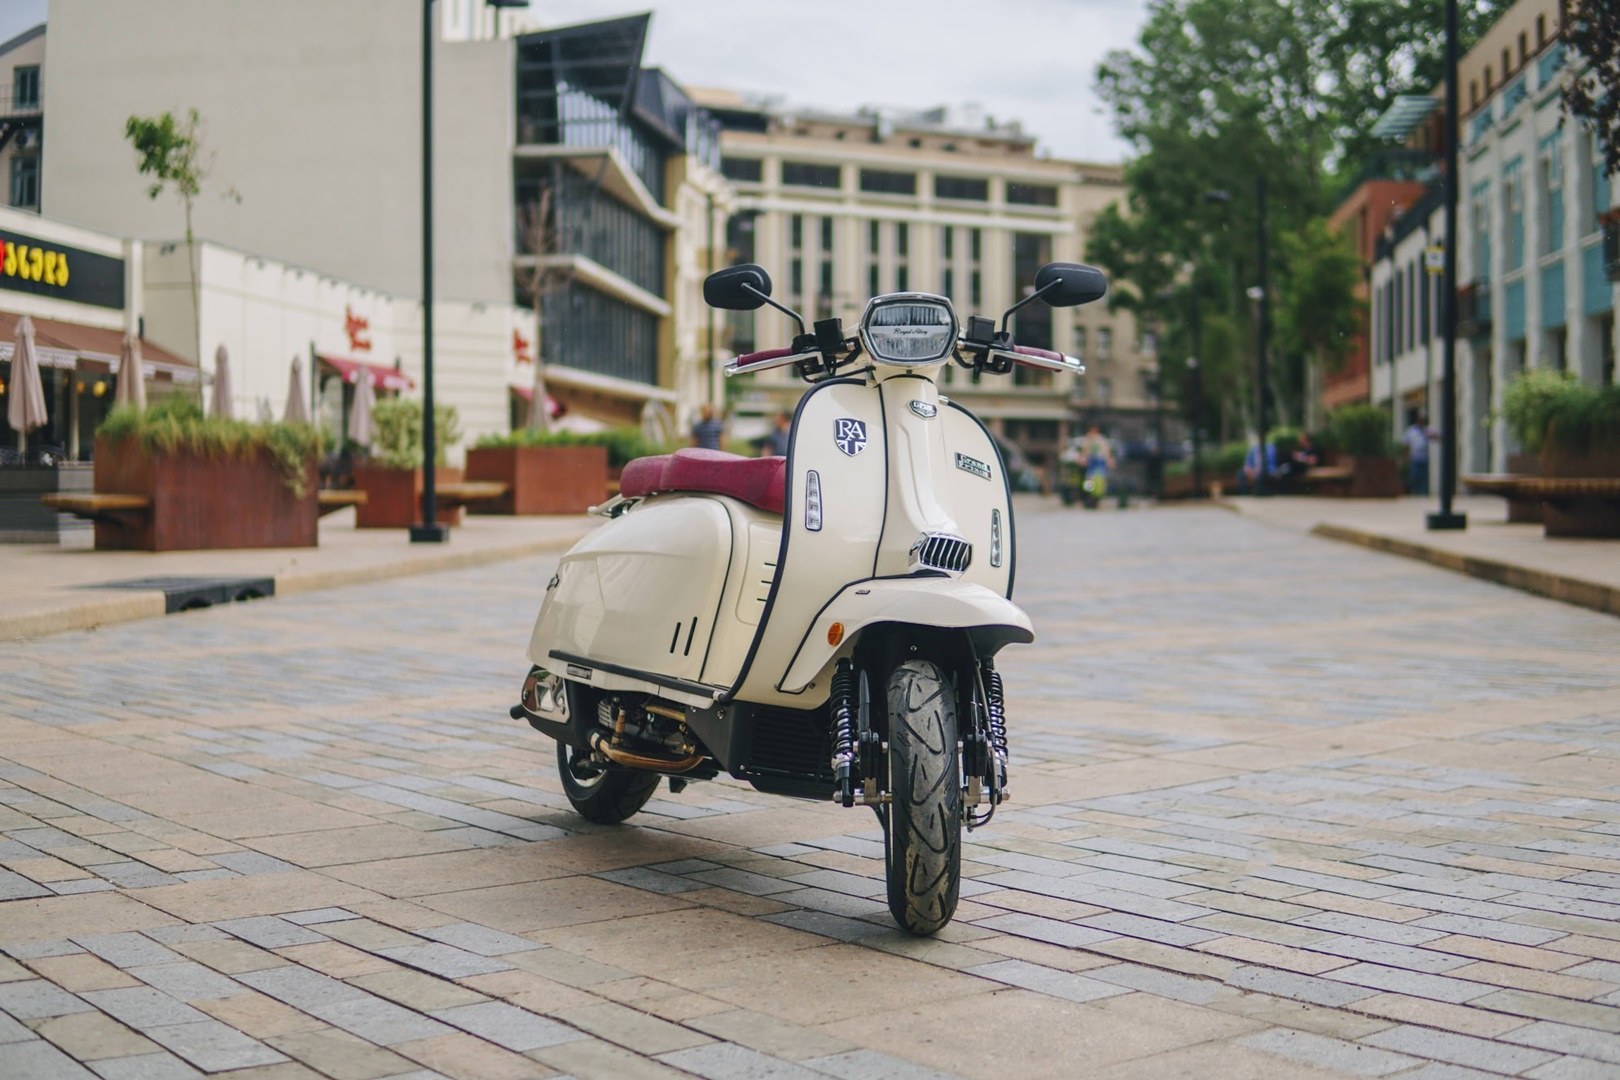 Llega Royal Alloy, la marca de scooters británica con aires a Lambretta